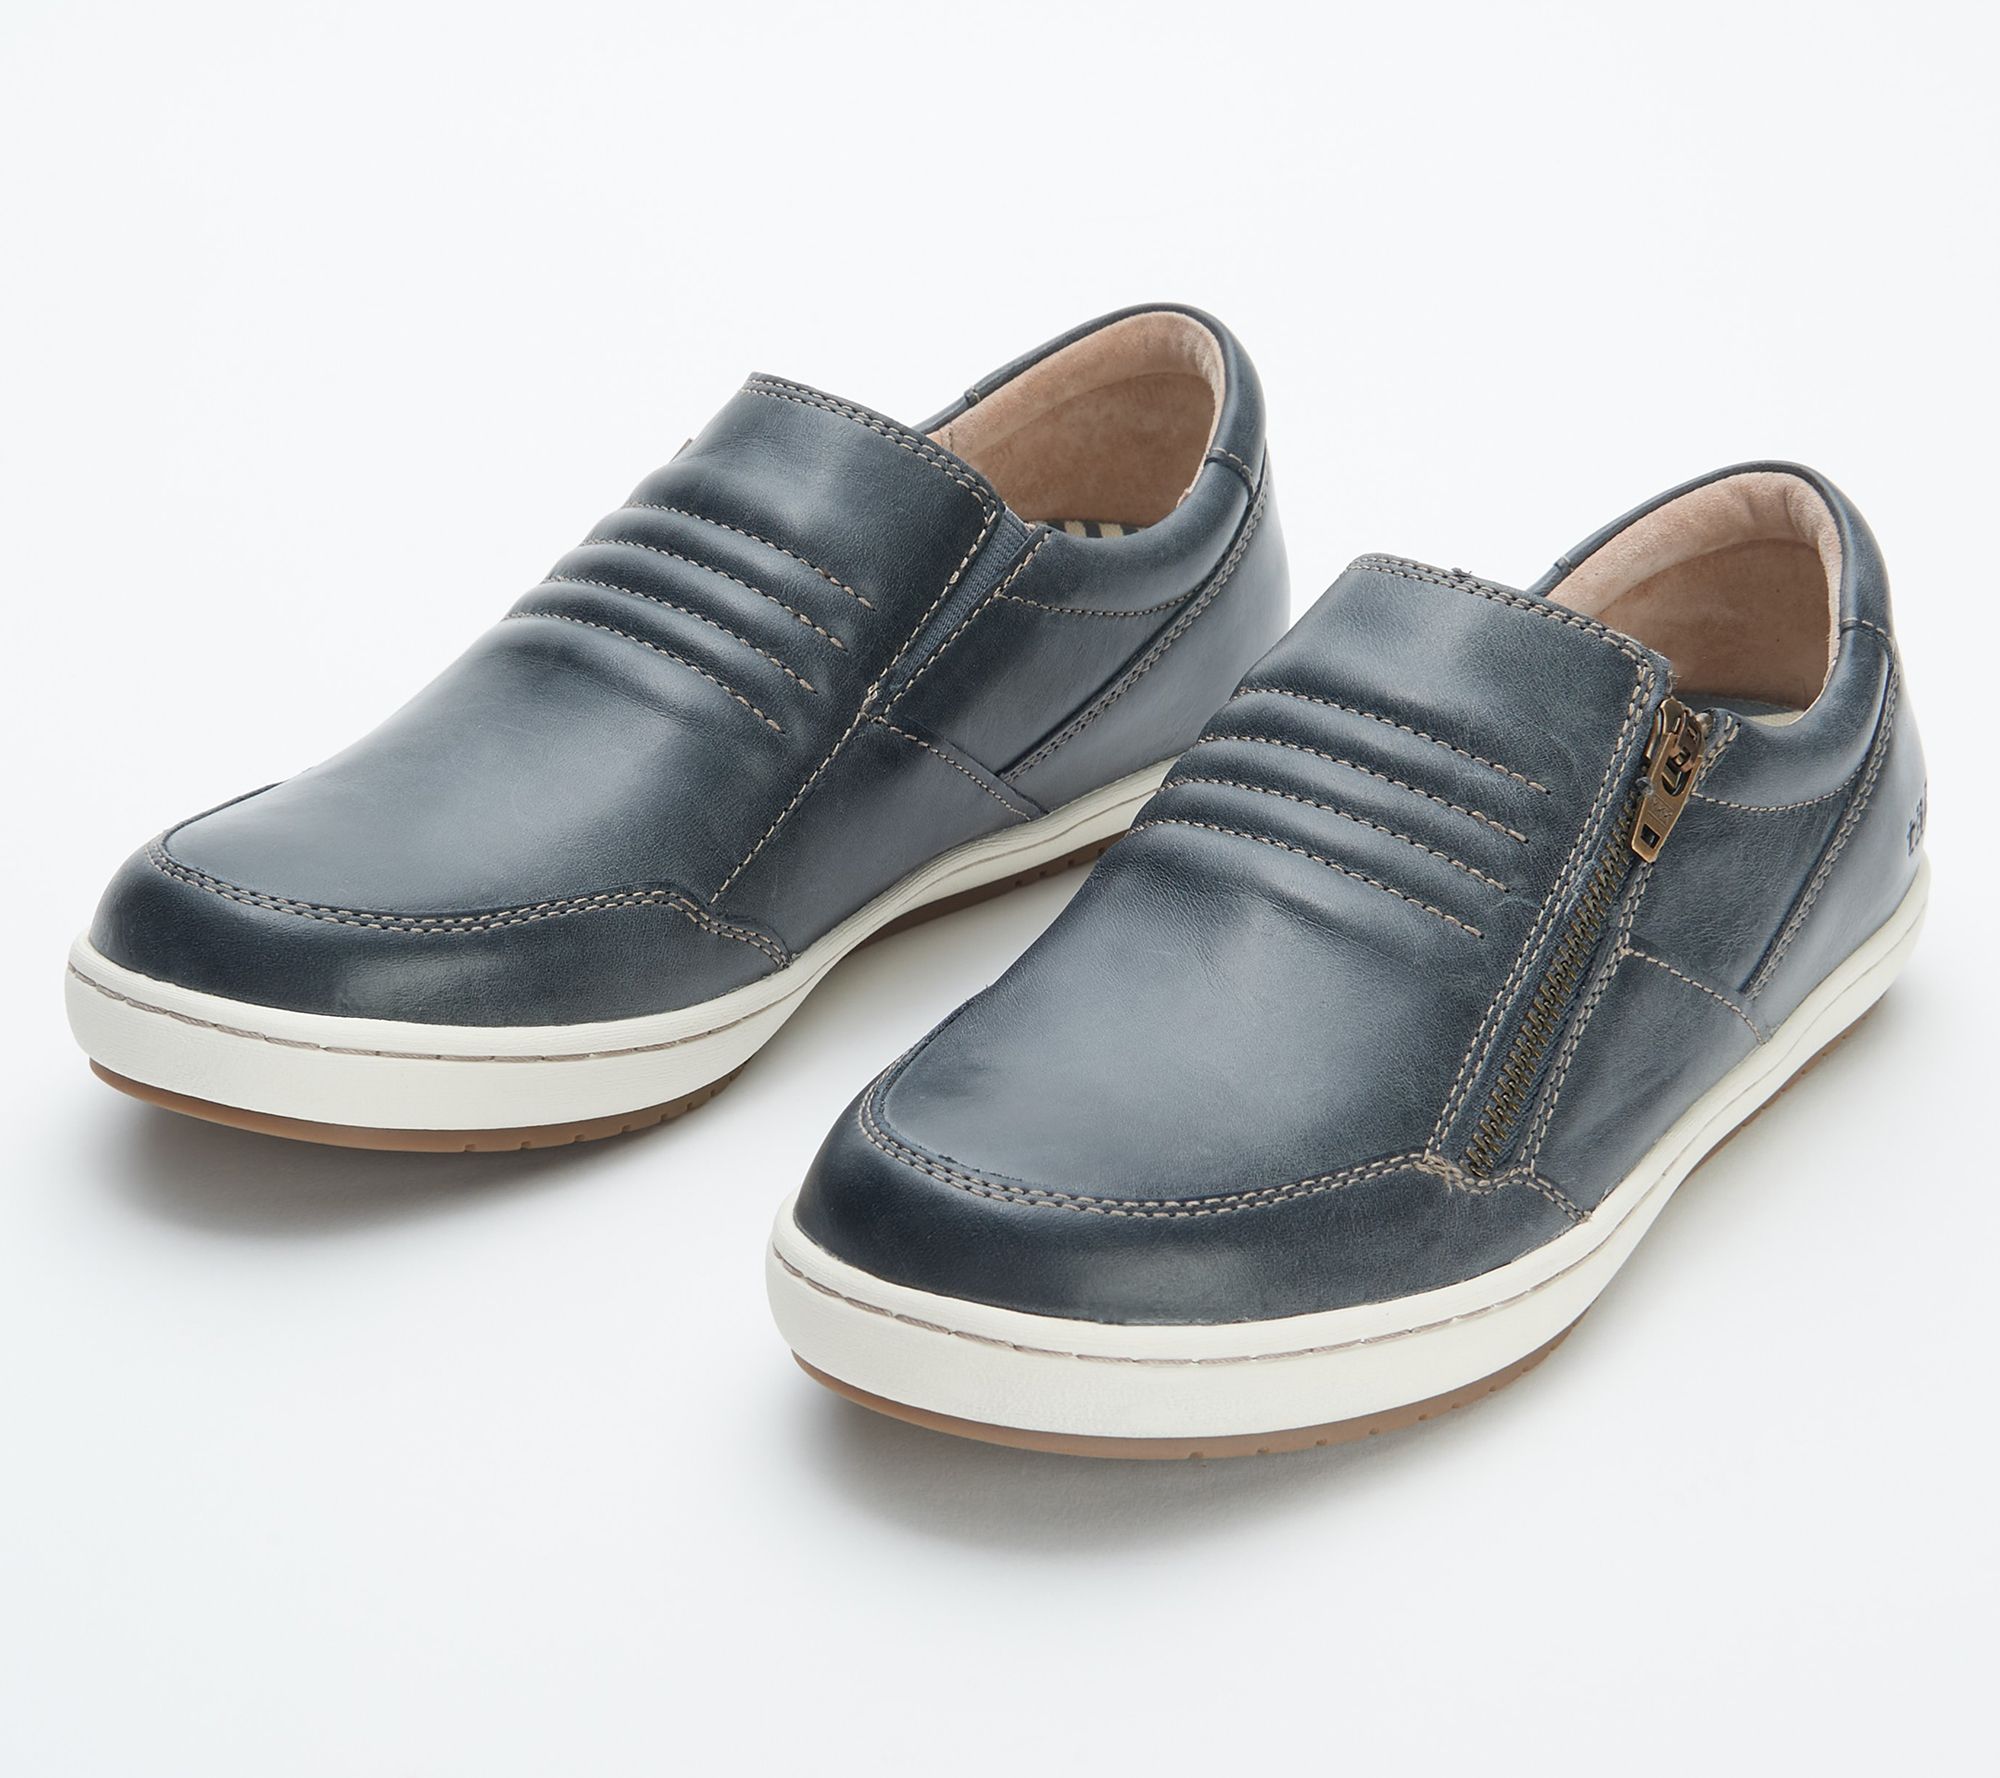 Taos Leather Slip-On Shoes - Zipward - QVC.com